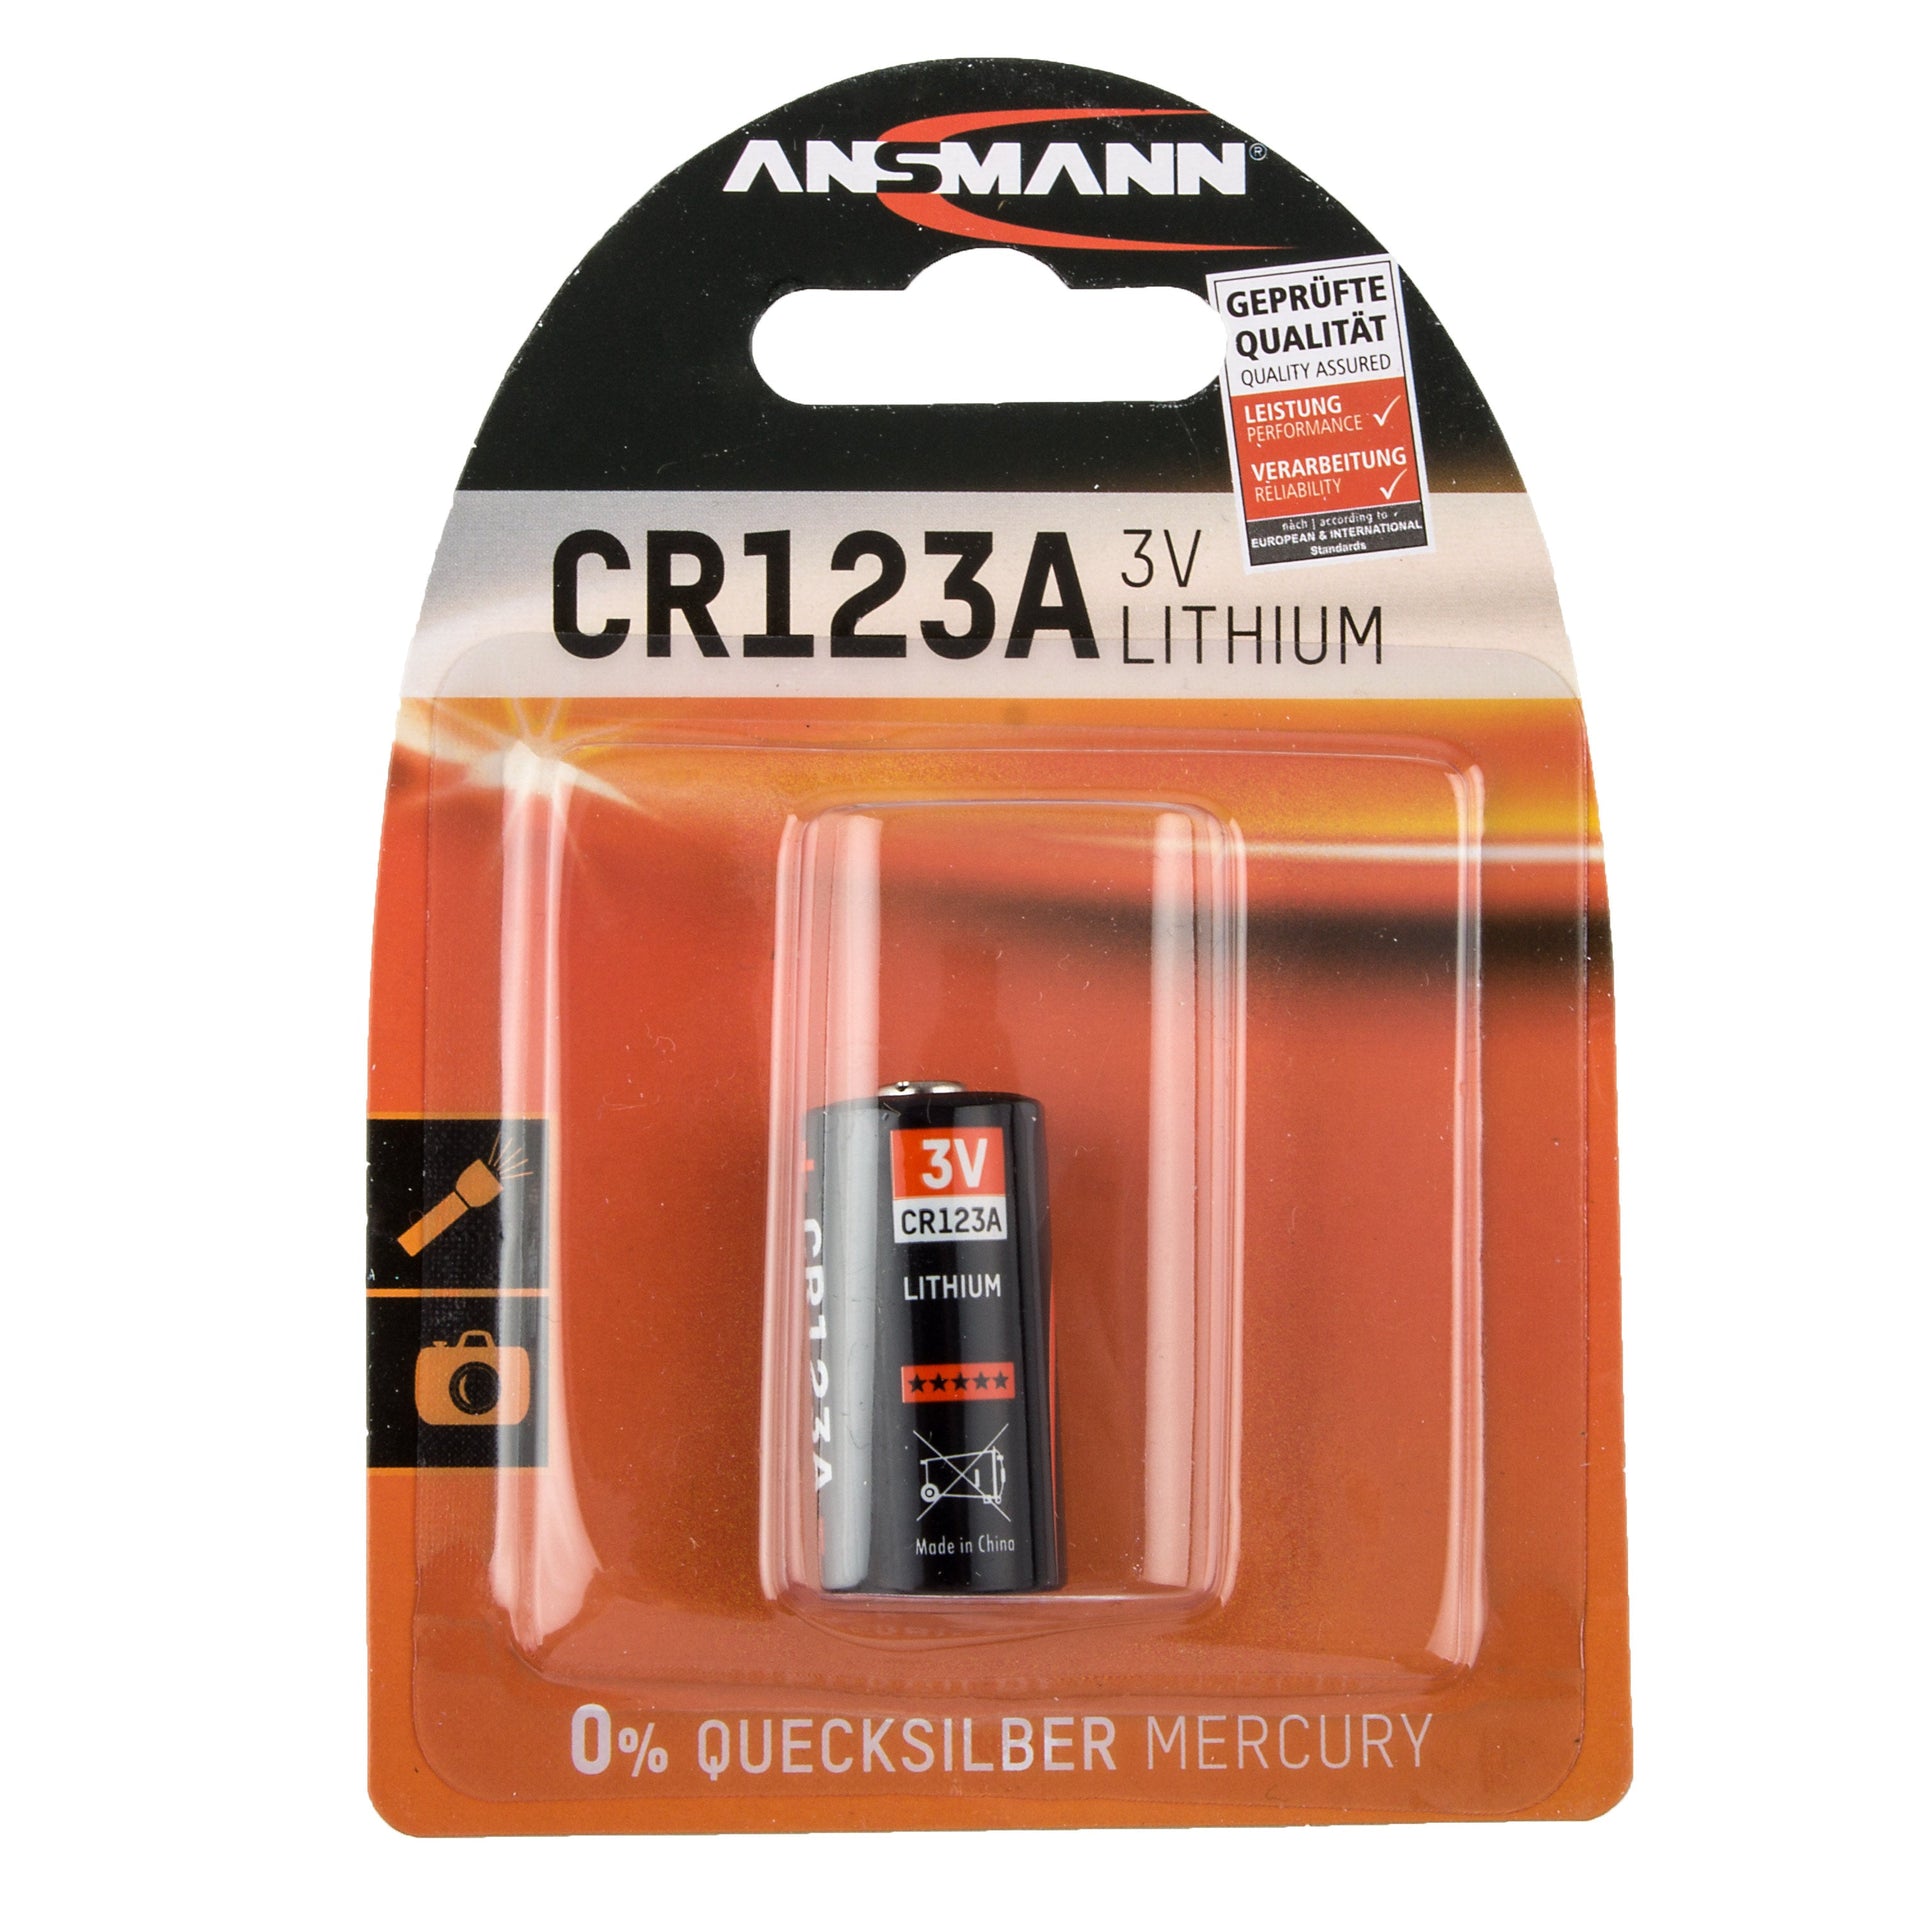 Lithium Photo Battery CR123A